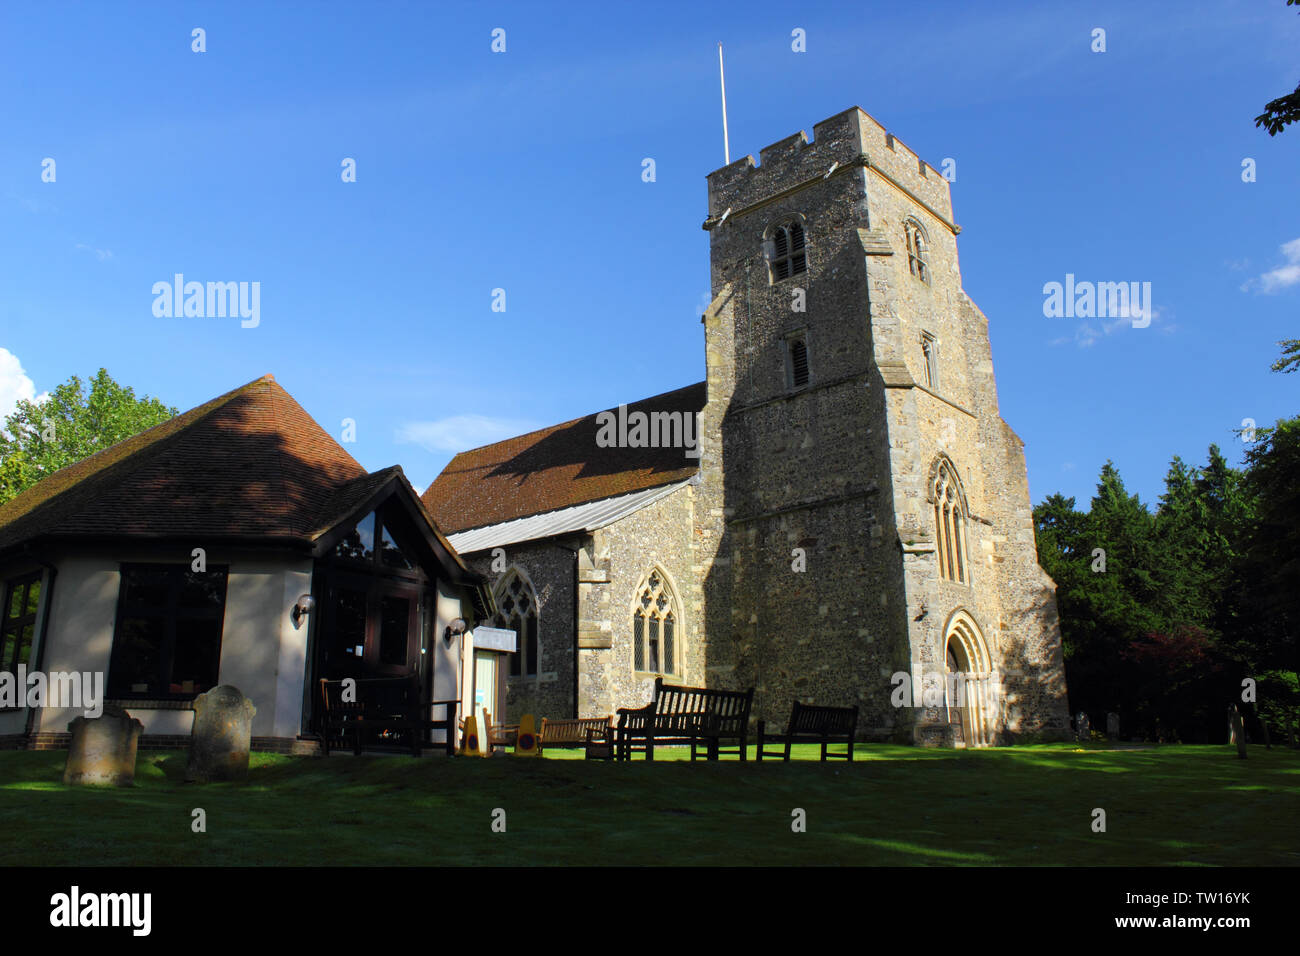 North Mymms Ort & Park, Hertfordshire, England - St. Mary's, die Pfarrkirche Stockfoto